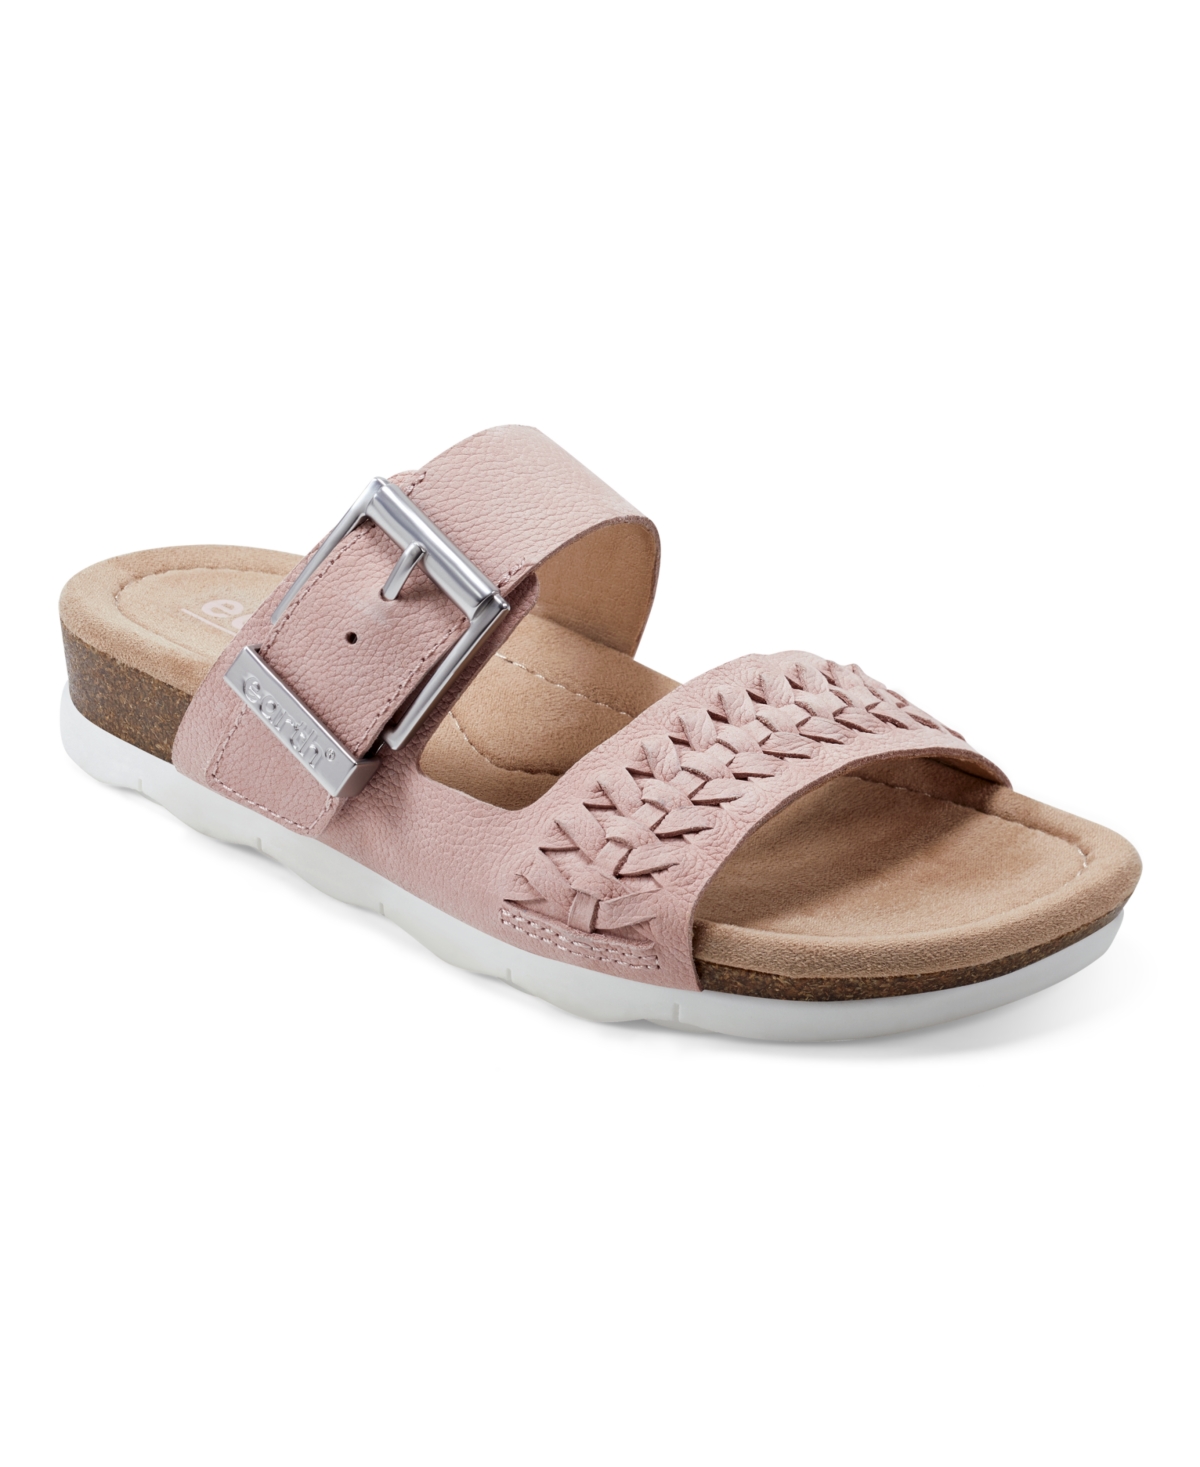 Earth Women's Emani Round Toe Casual Flat Slip-on Sandals In Light Pink Nubuck